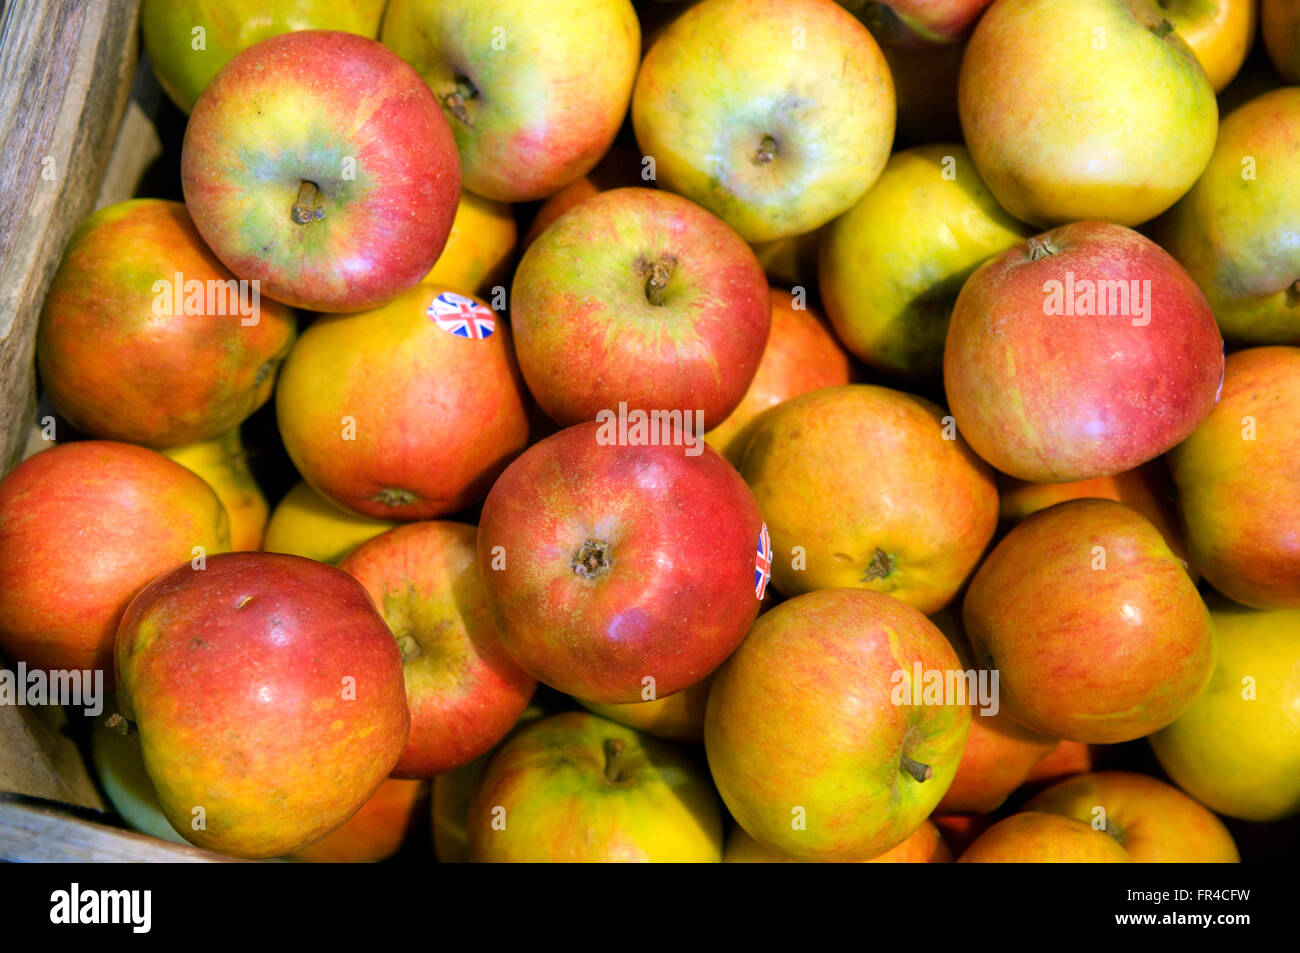 Allington Farm Shop,Chippenham,Wiltshire,UK. a box of English apples Stock Photo